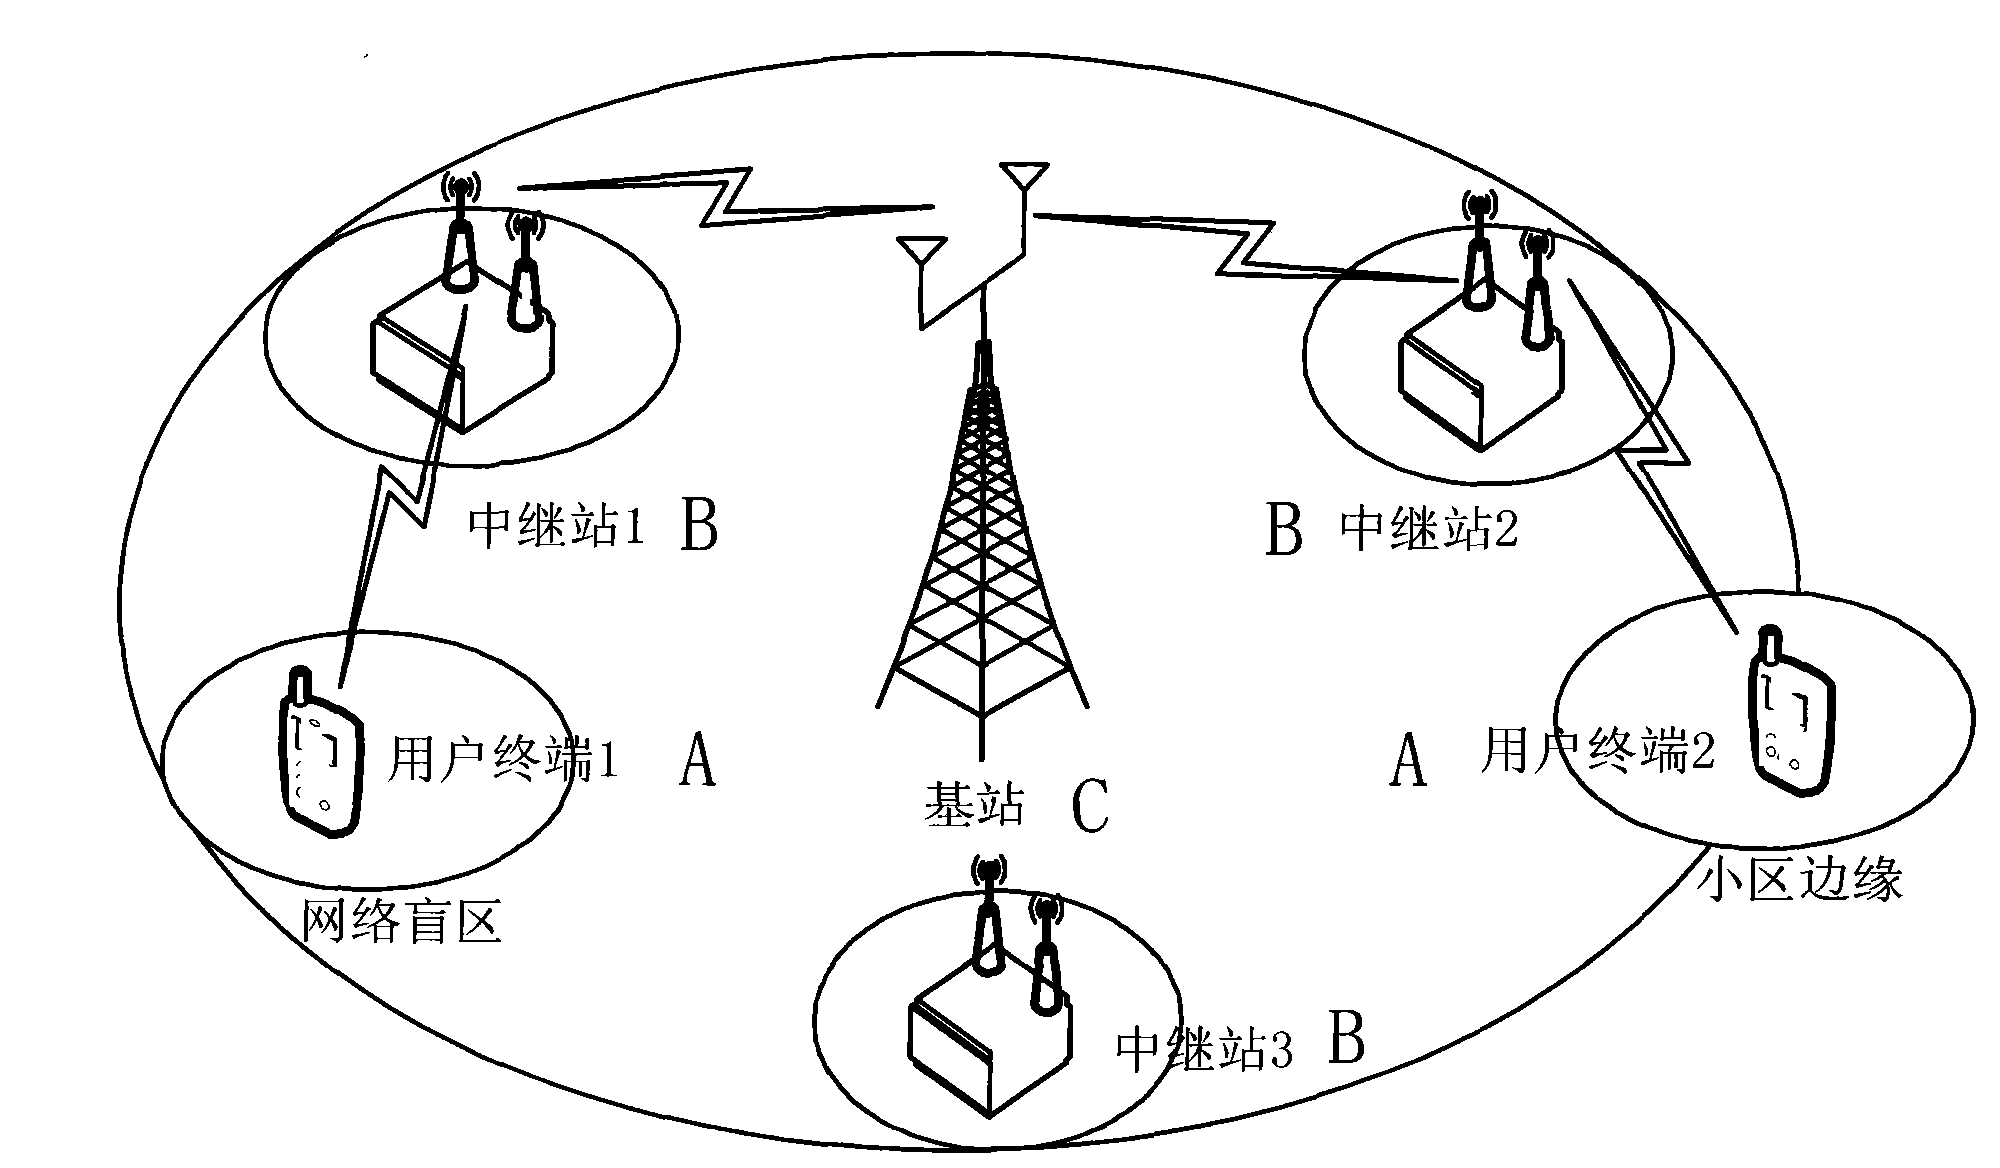 Virtual multi-input multi-output relay transmission method based on space-time block coding